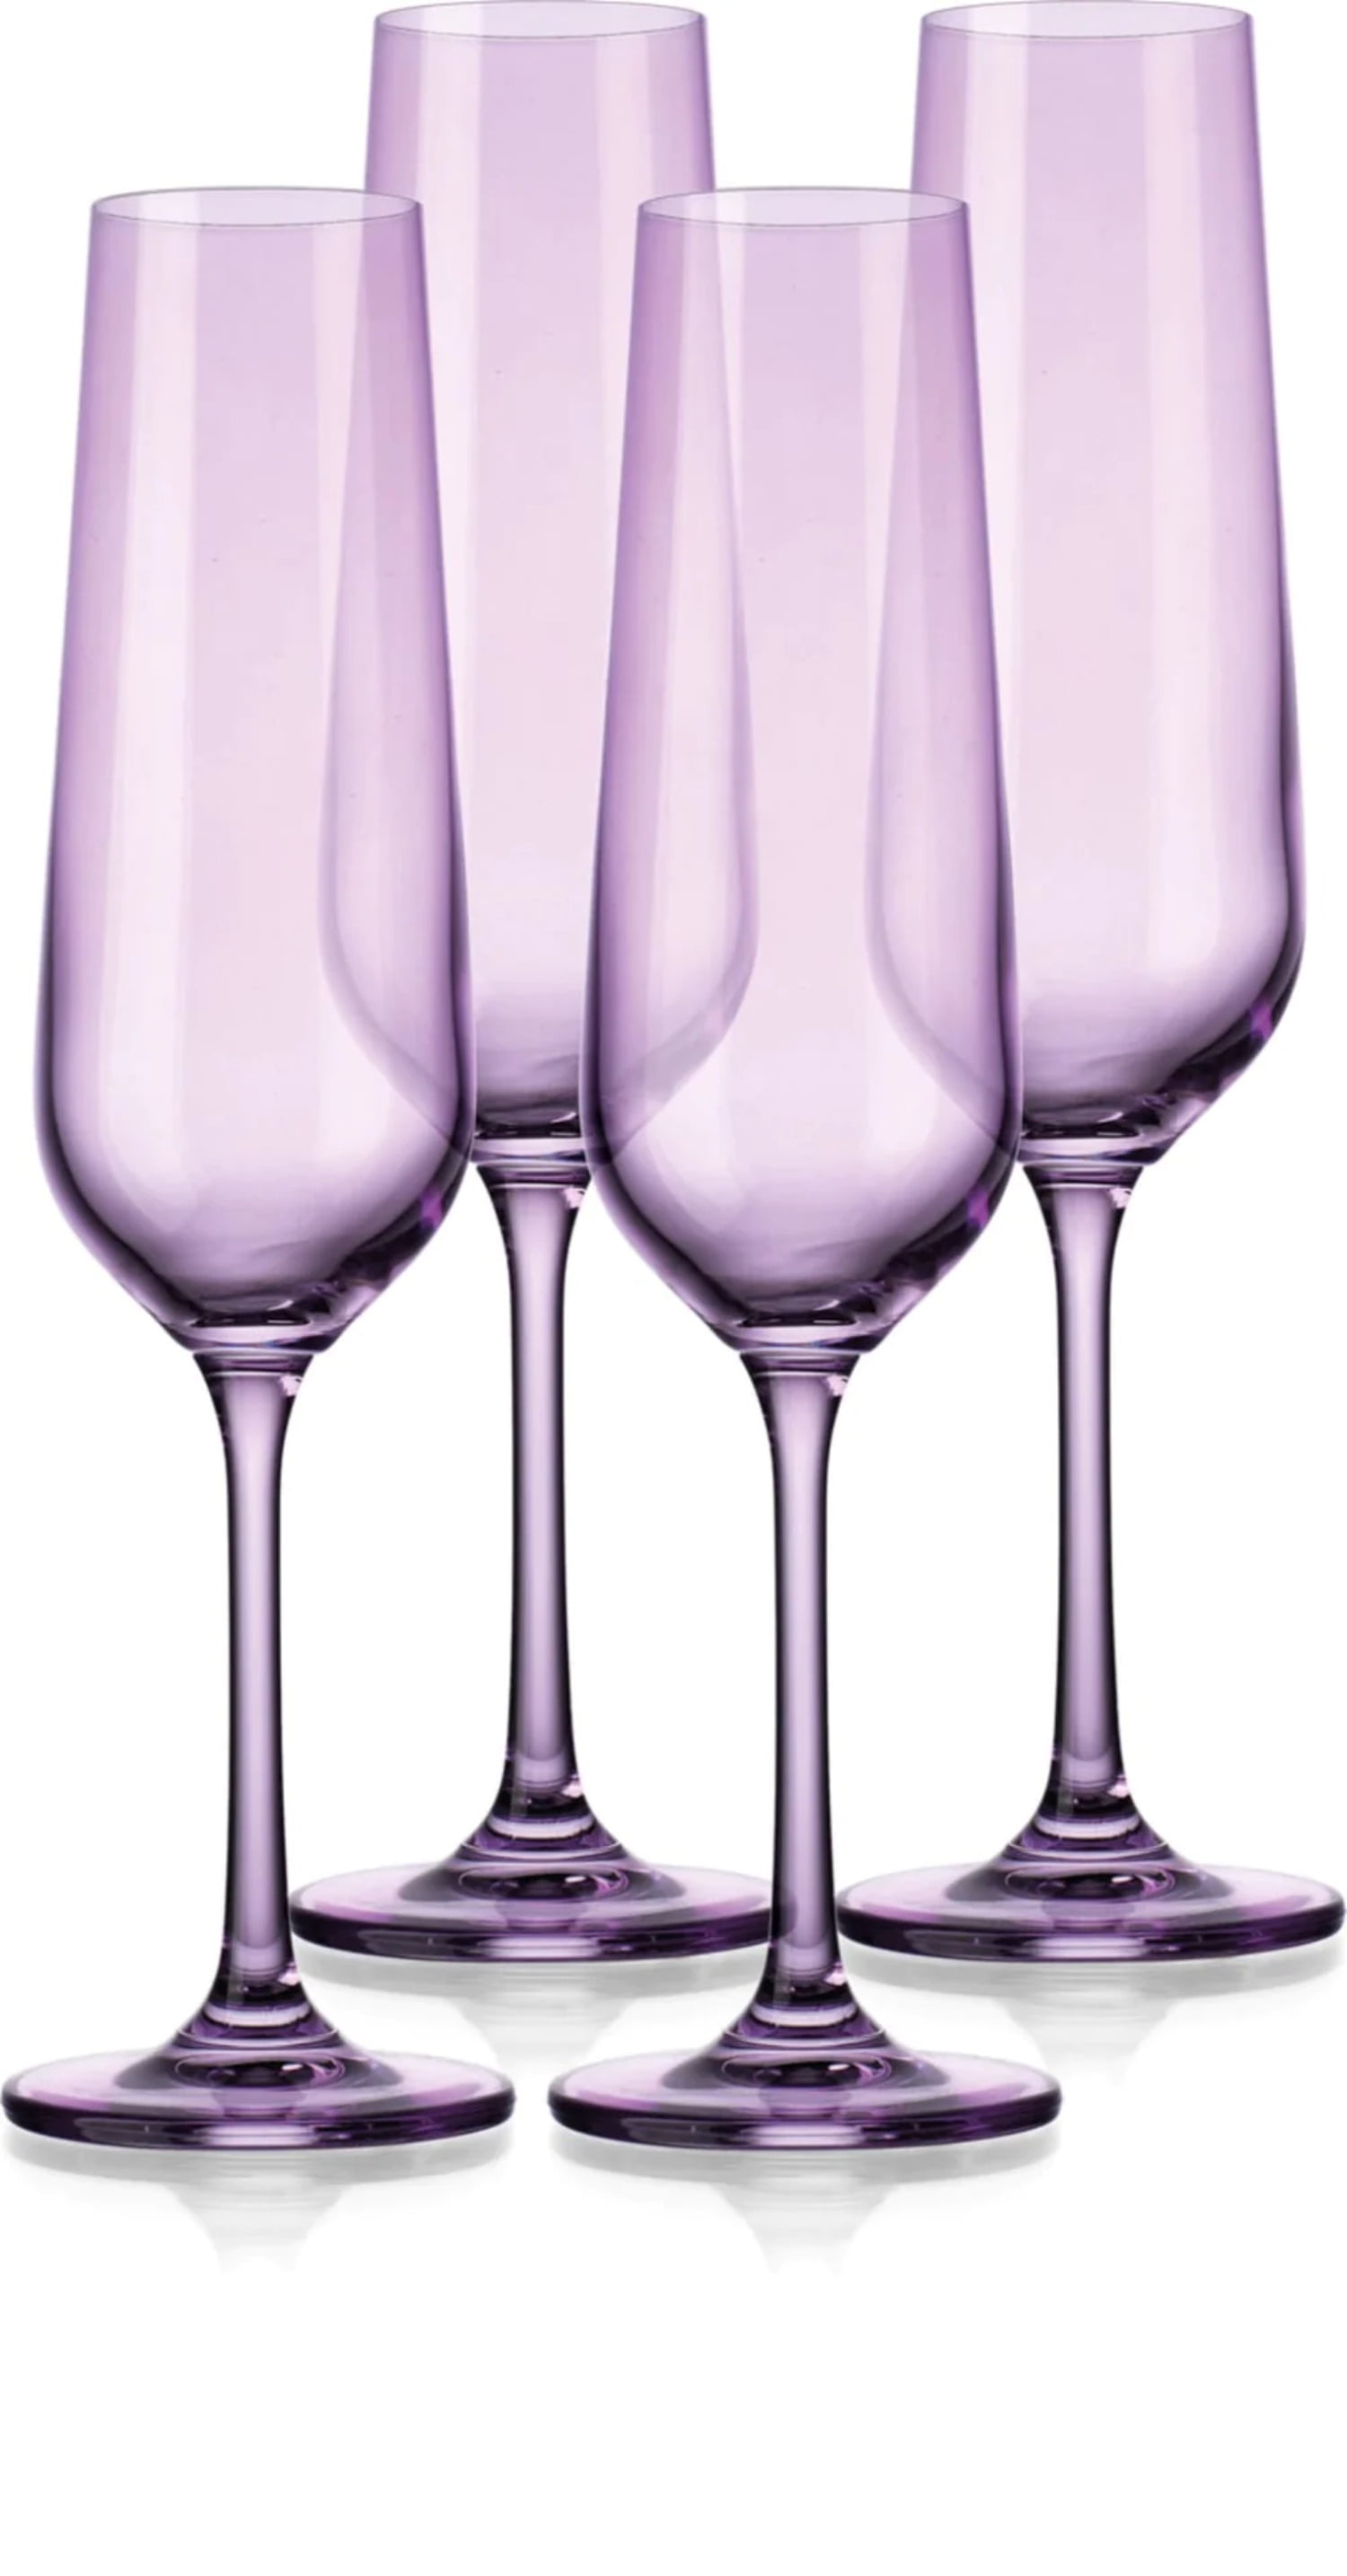 Spode Kingsley Champagne Flute Set of 4 Glassware Purple Plum 8oz